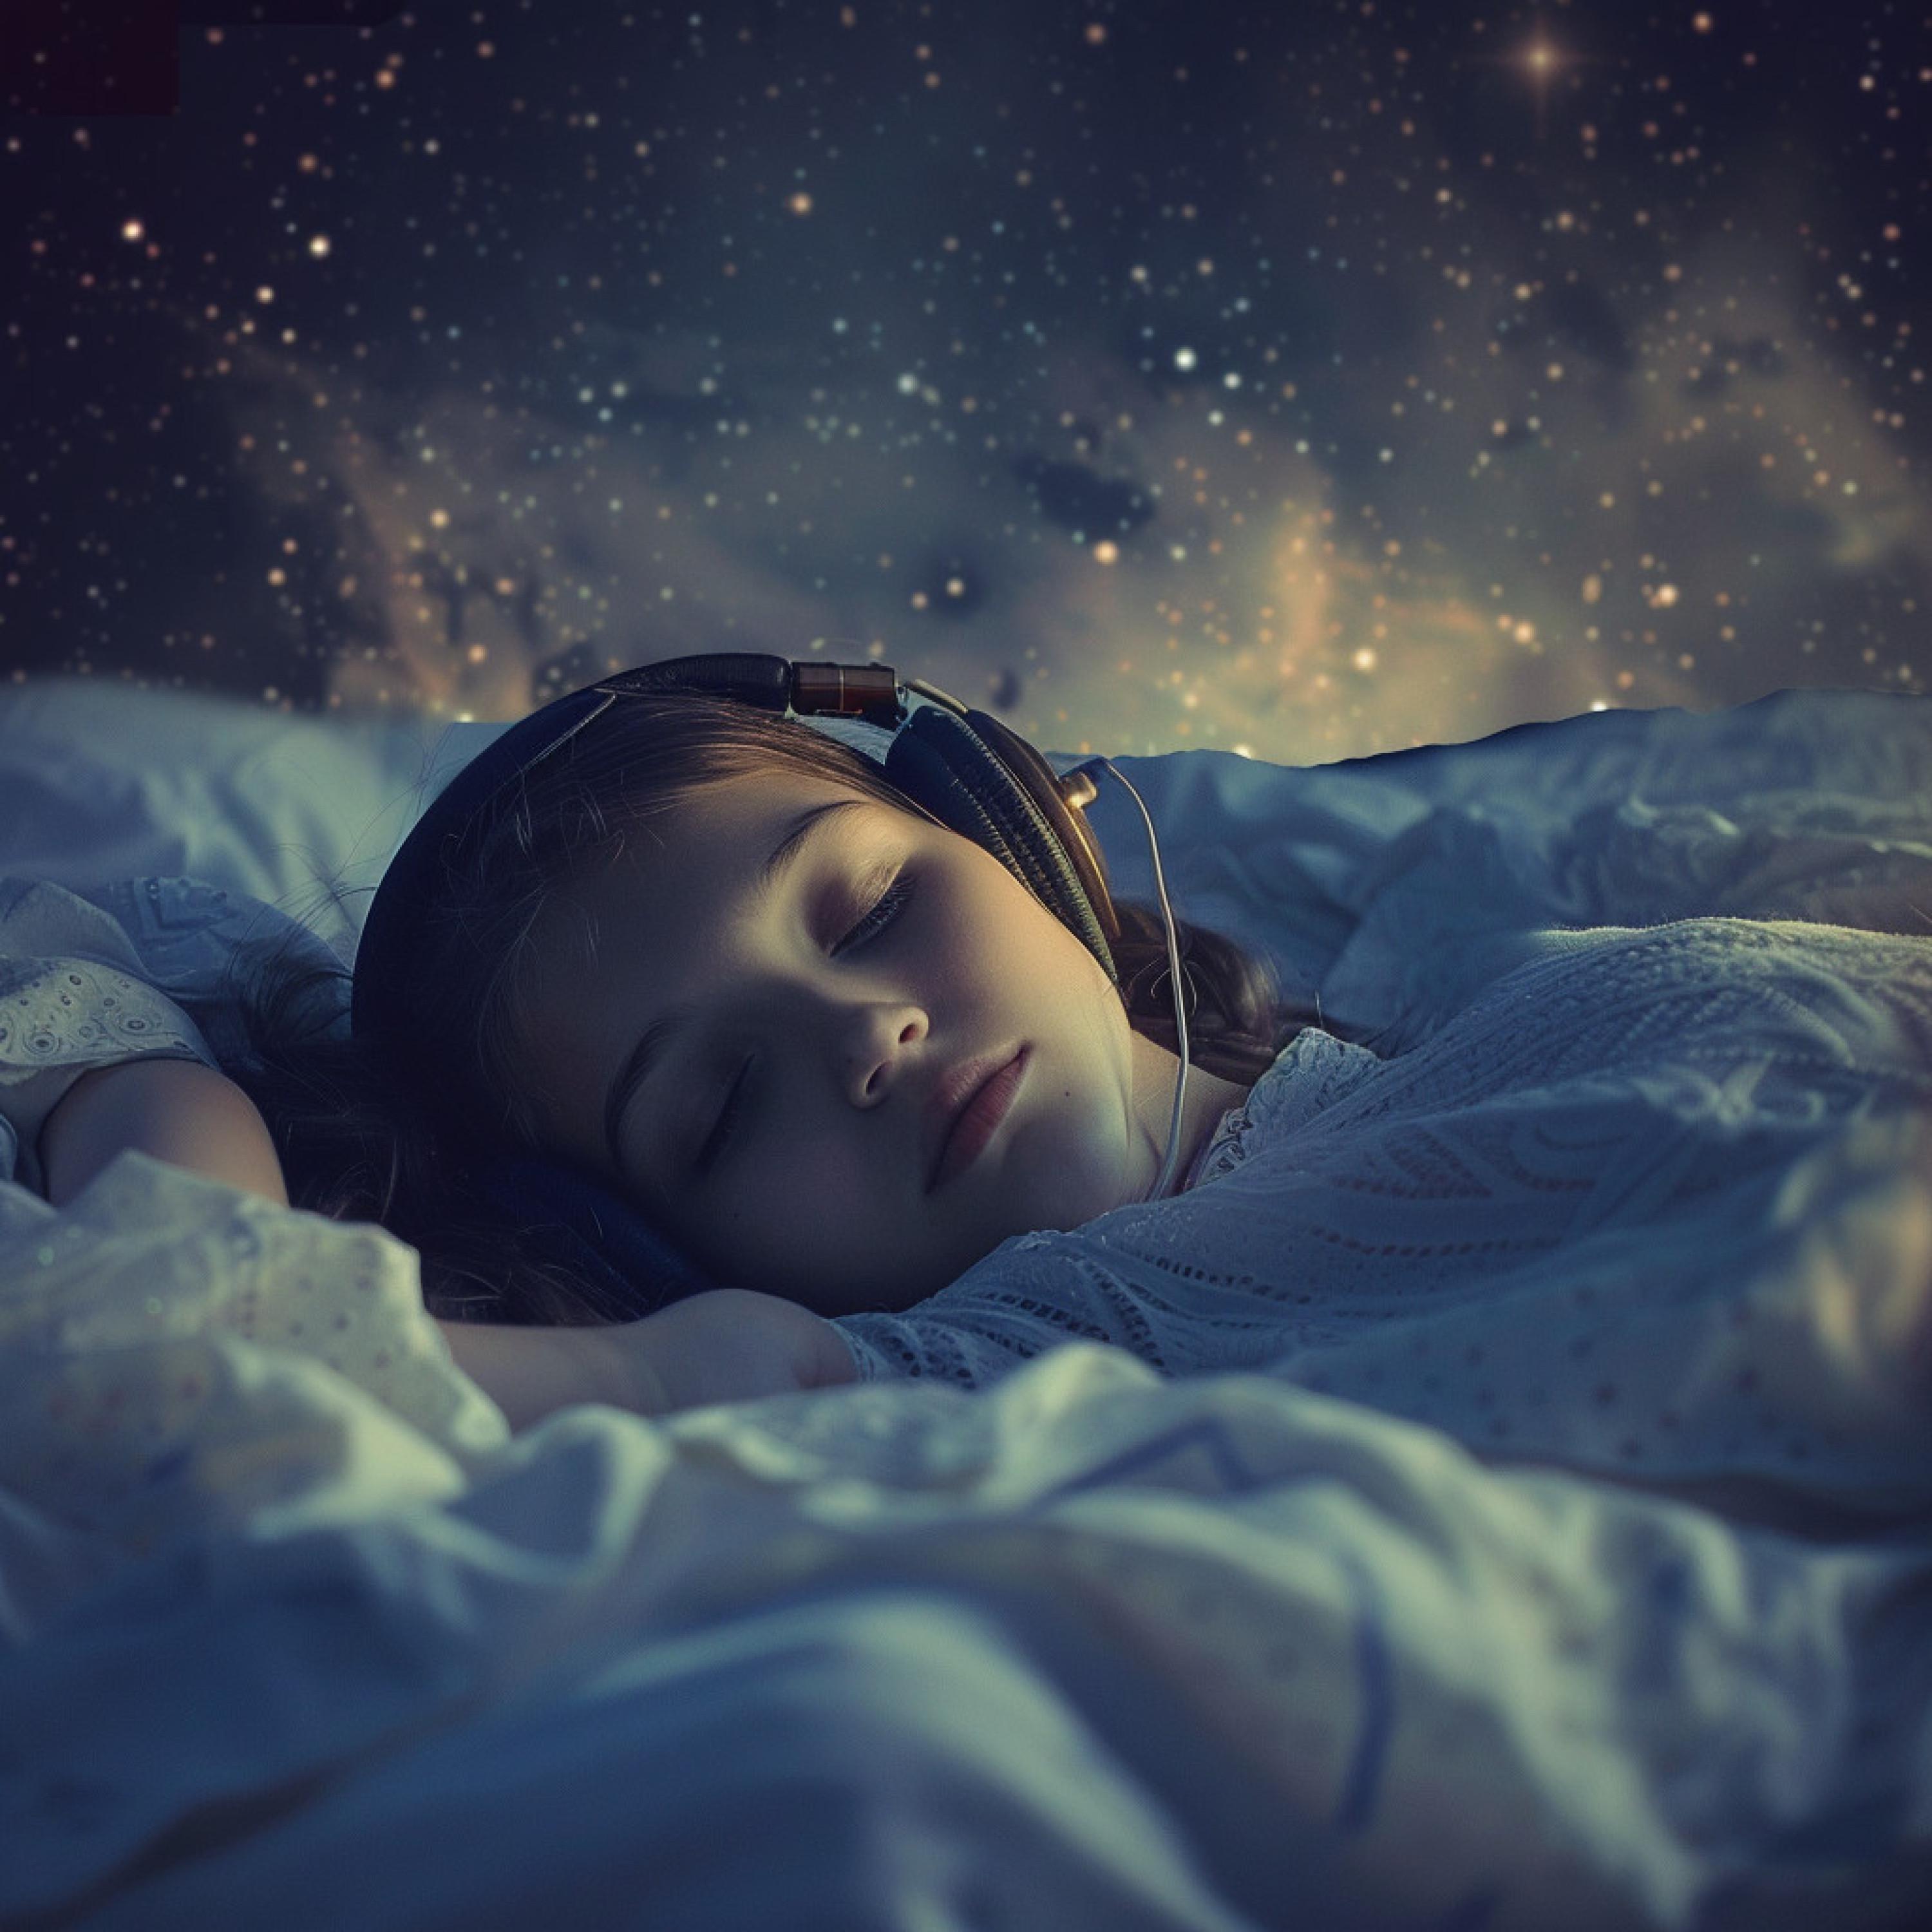 Music for Sleeping Puppies - Sleep Under Stars